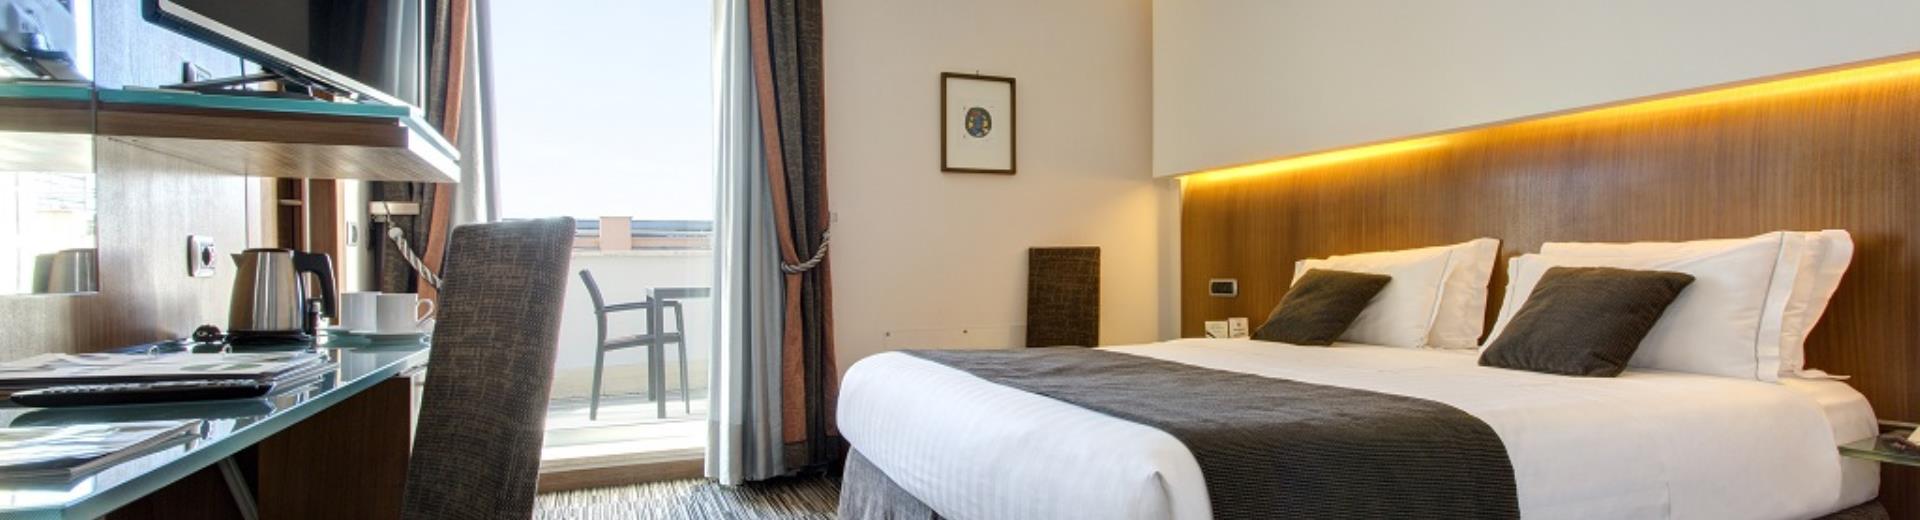 Hotel Universo Rome 4 star rooms